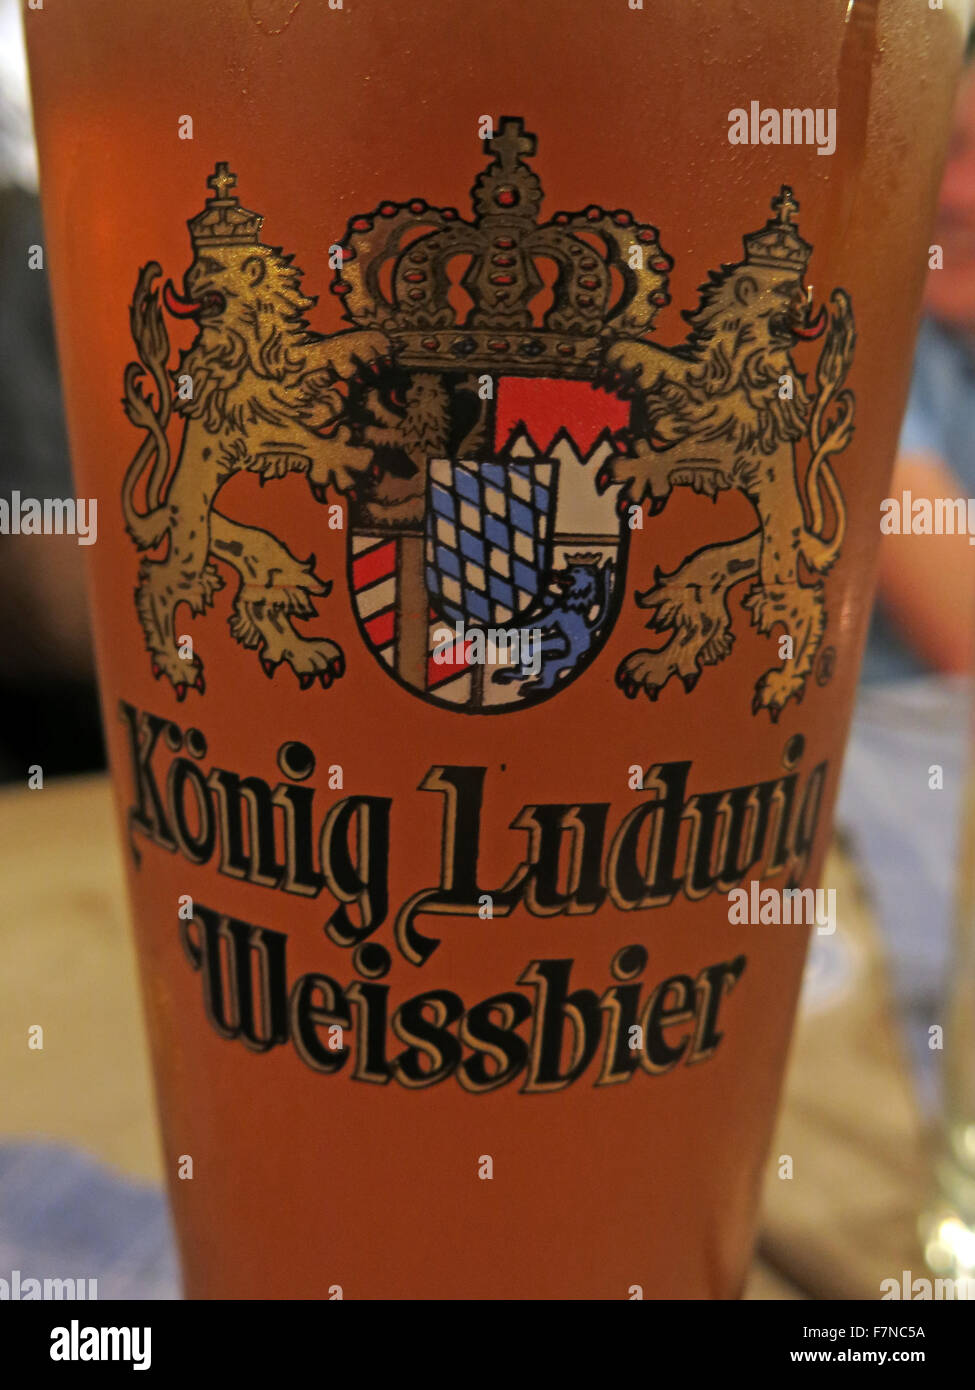 Un bicchiere di Konig Ludwig Weissbier, Monaco di Baviera, Germania Foto Stock